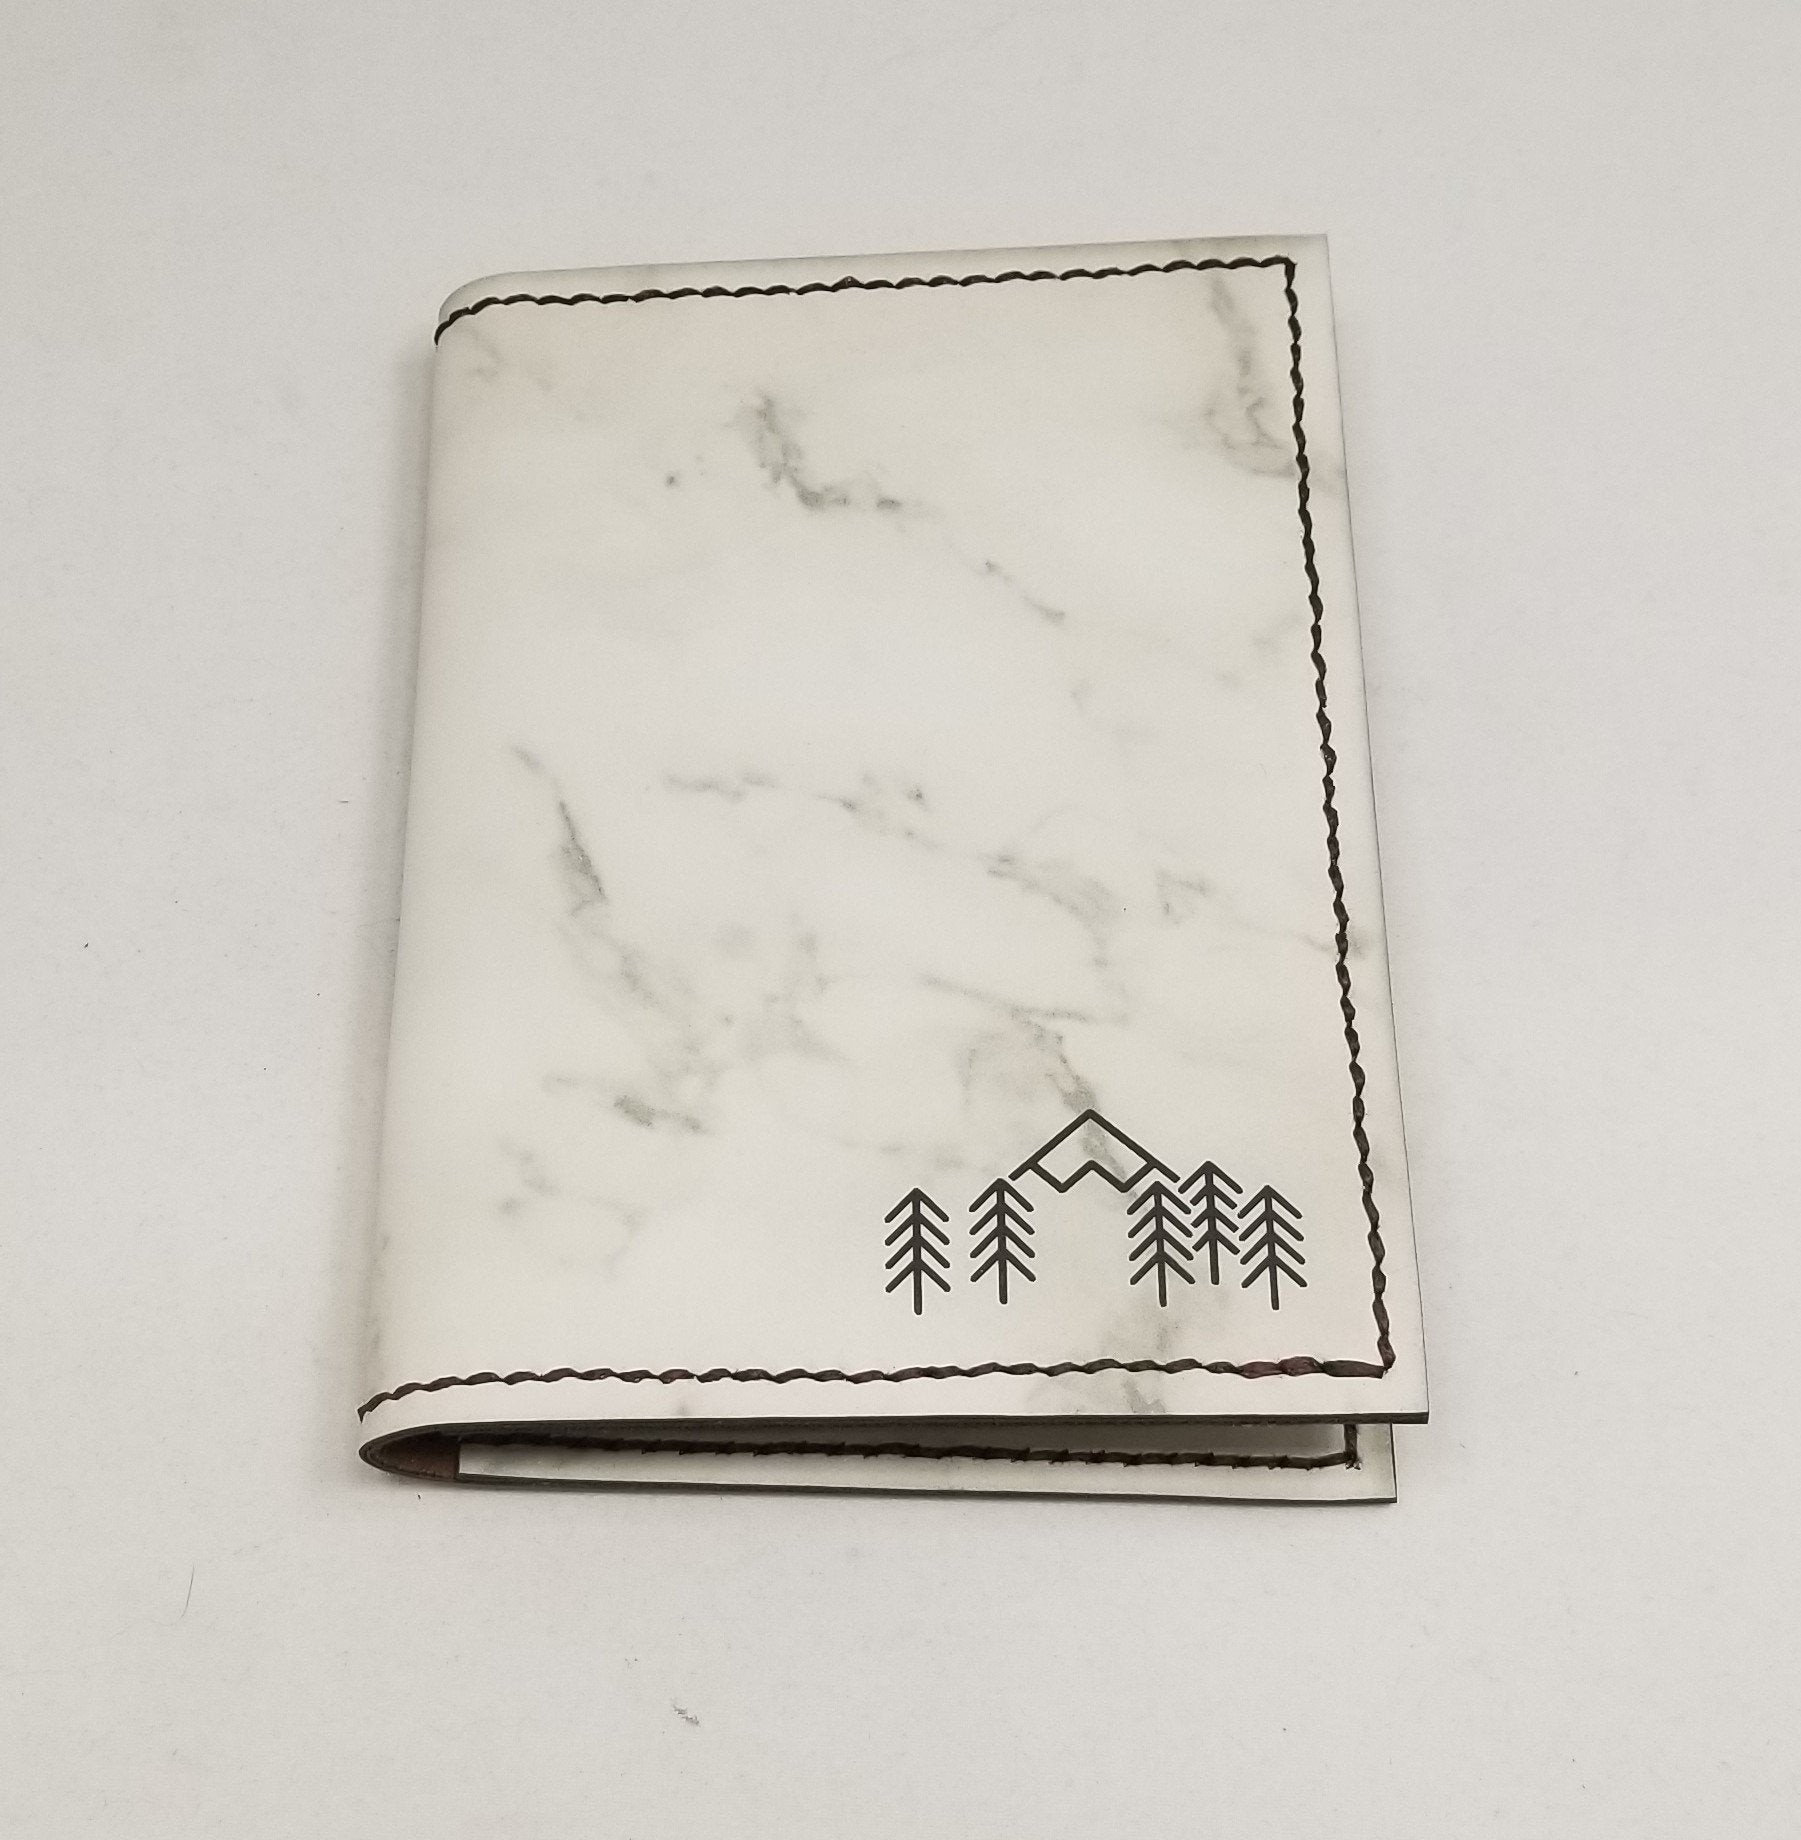 NW nw coin purse acrylic template handbag leather pattern acrylic